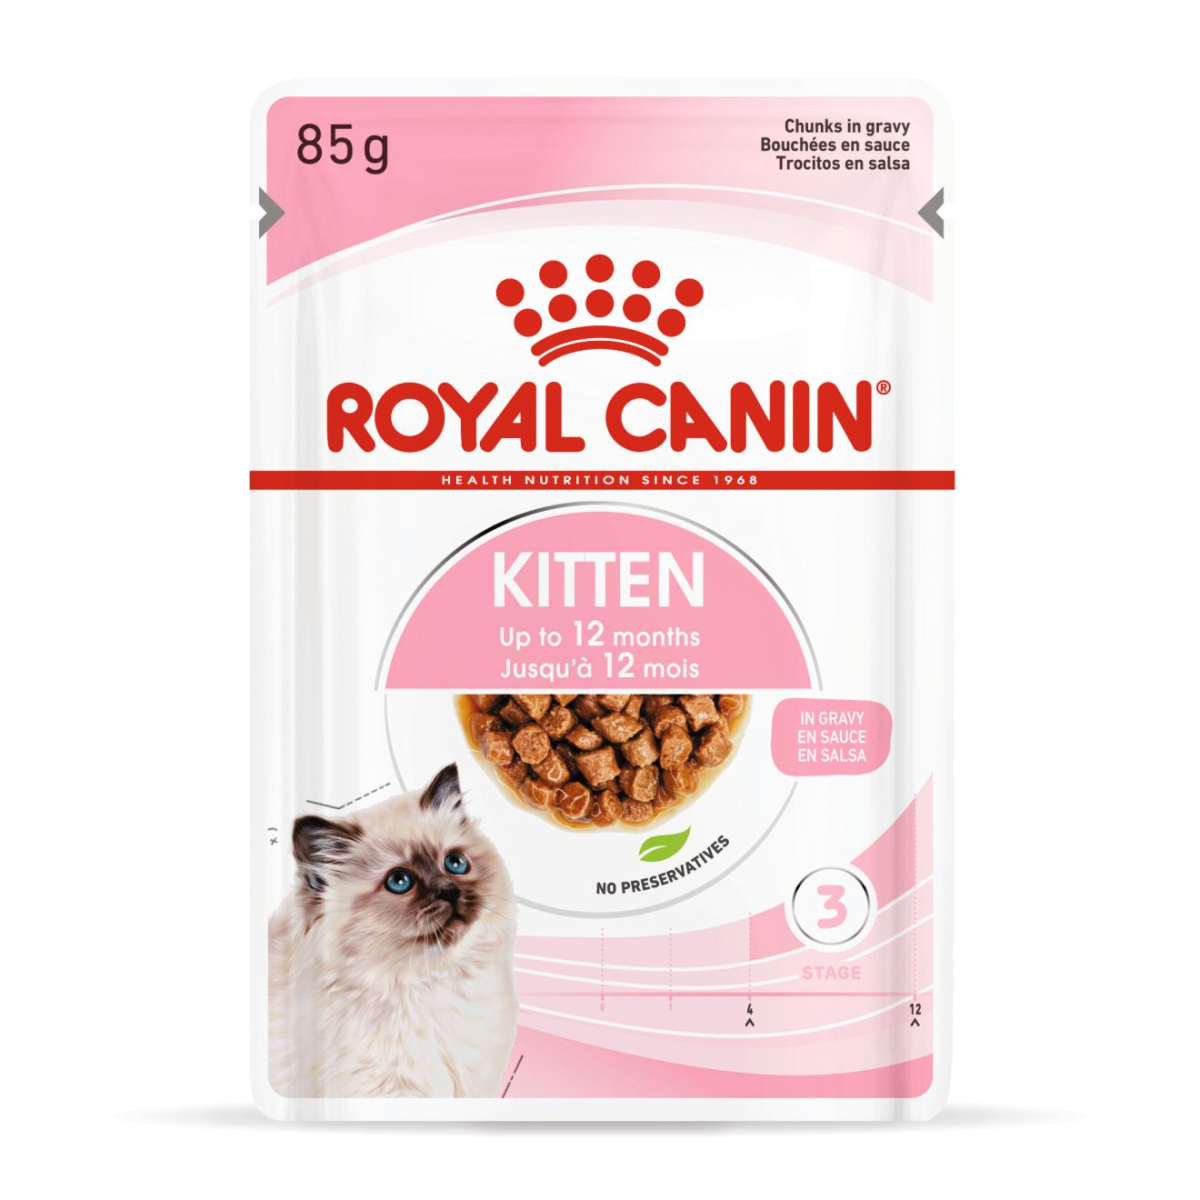 Feline Health Nutrition Kitten Gravy x12 Pouches